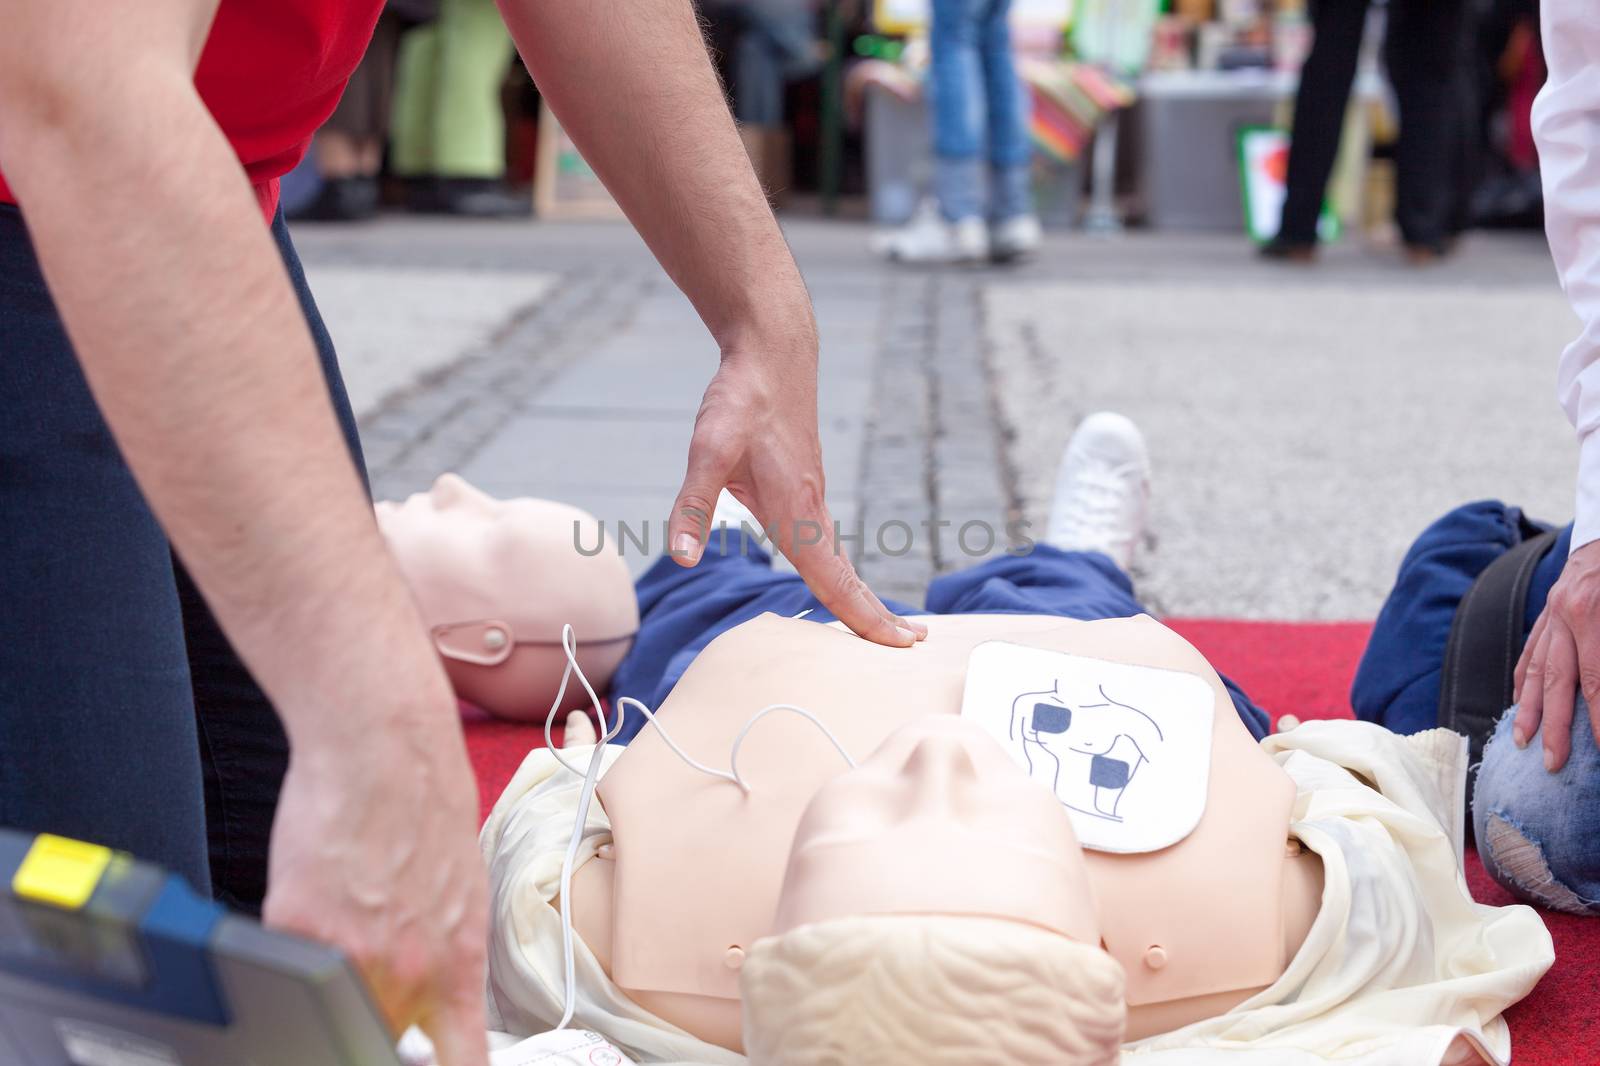 Defibrillation training. First aid. CPR. by wellphoto